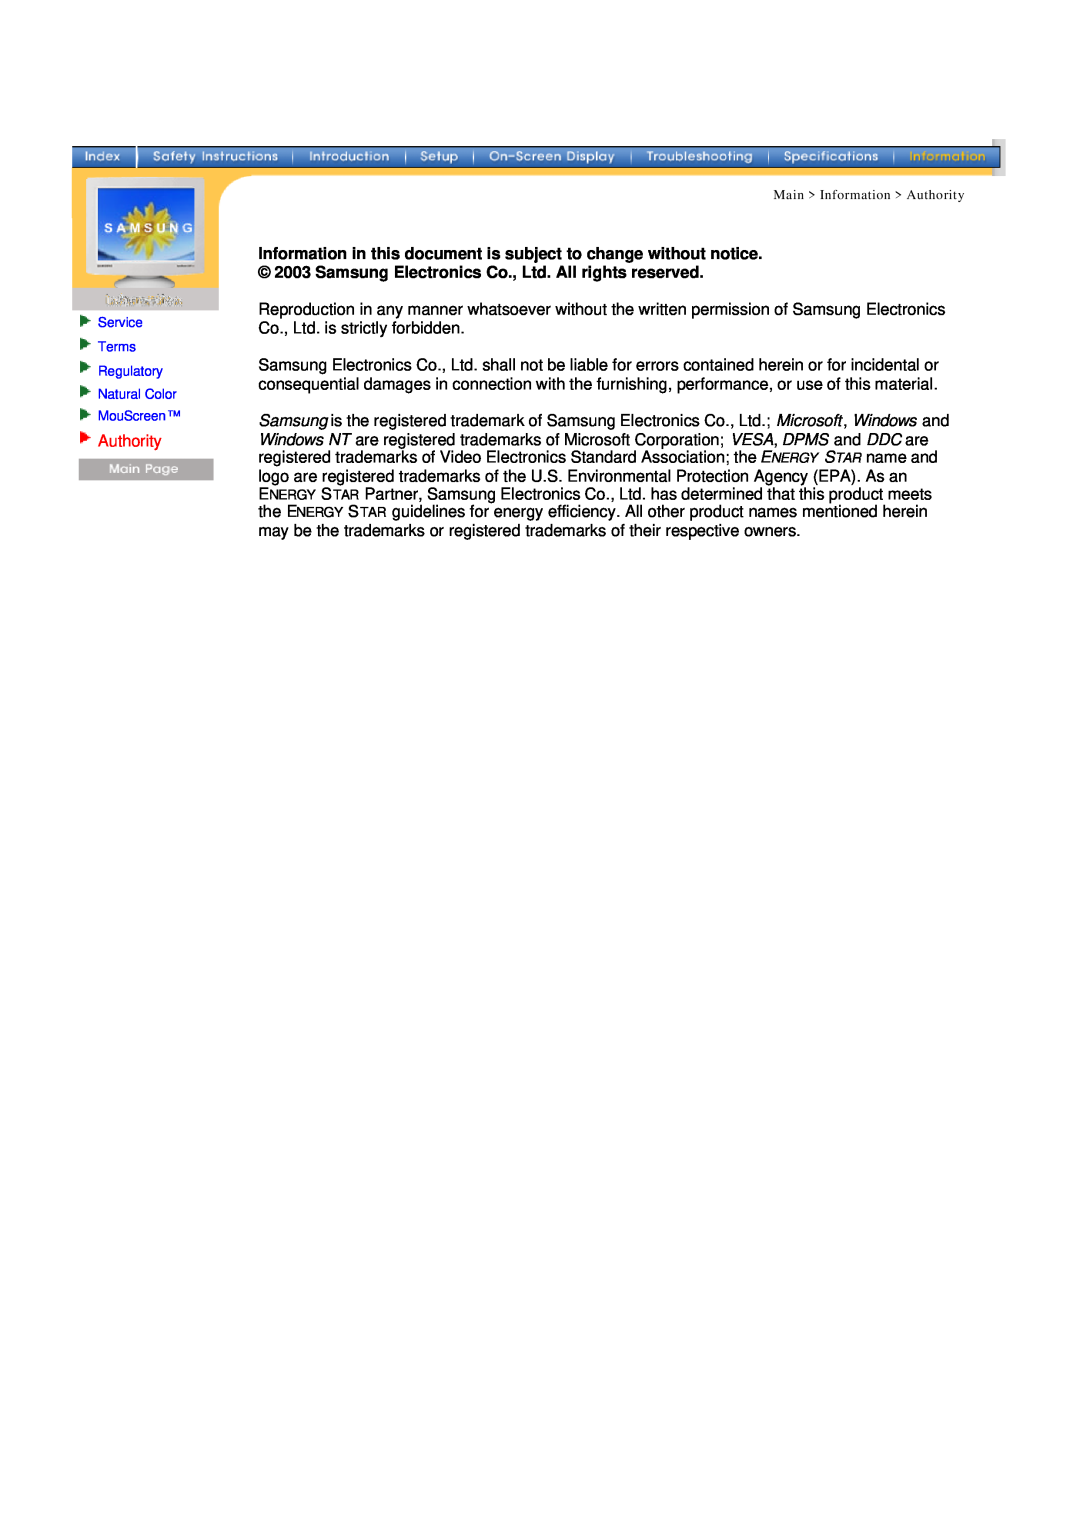 Samsung 957D manual Service Terms Regulatory Natural Color MouScreen, Main Information Authority 